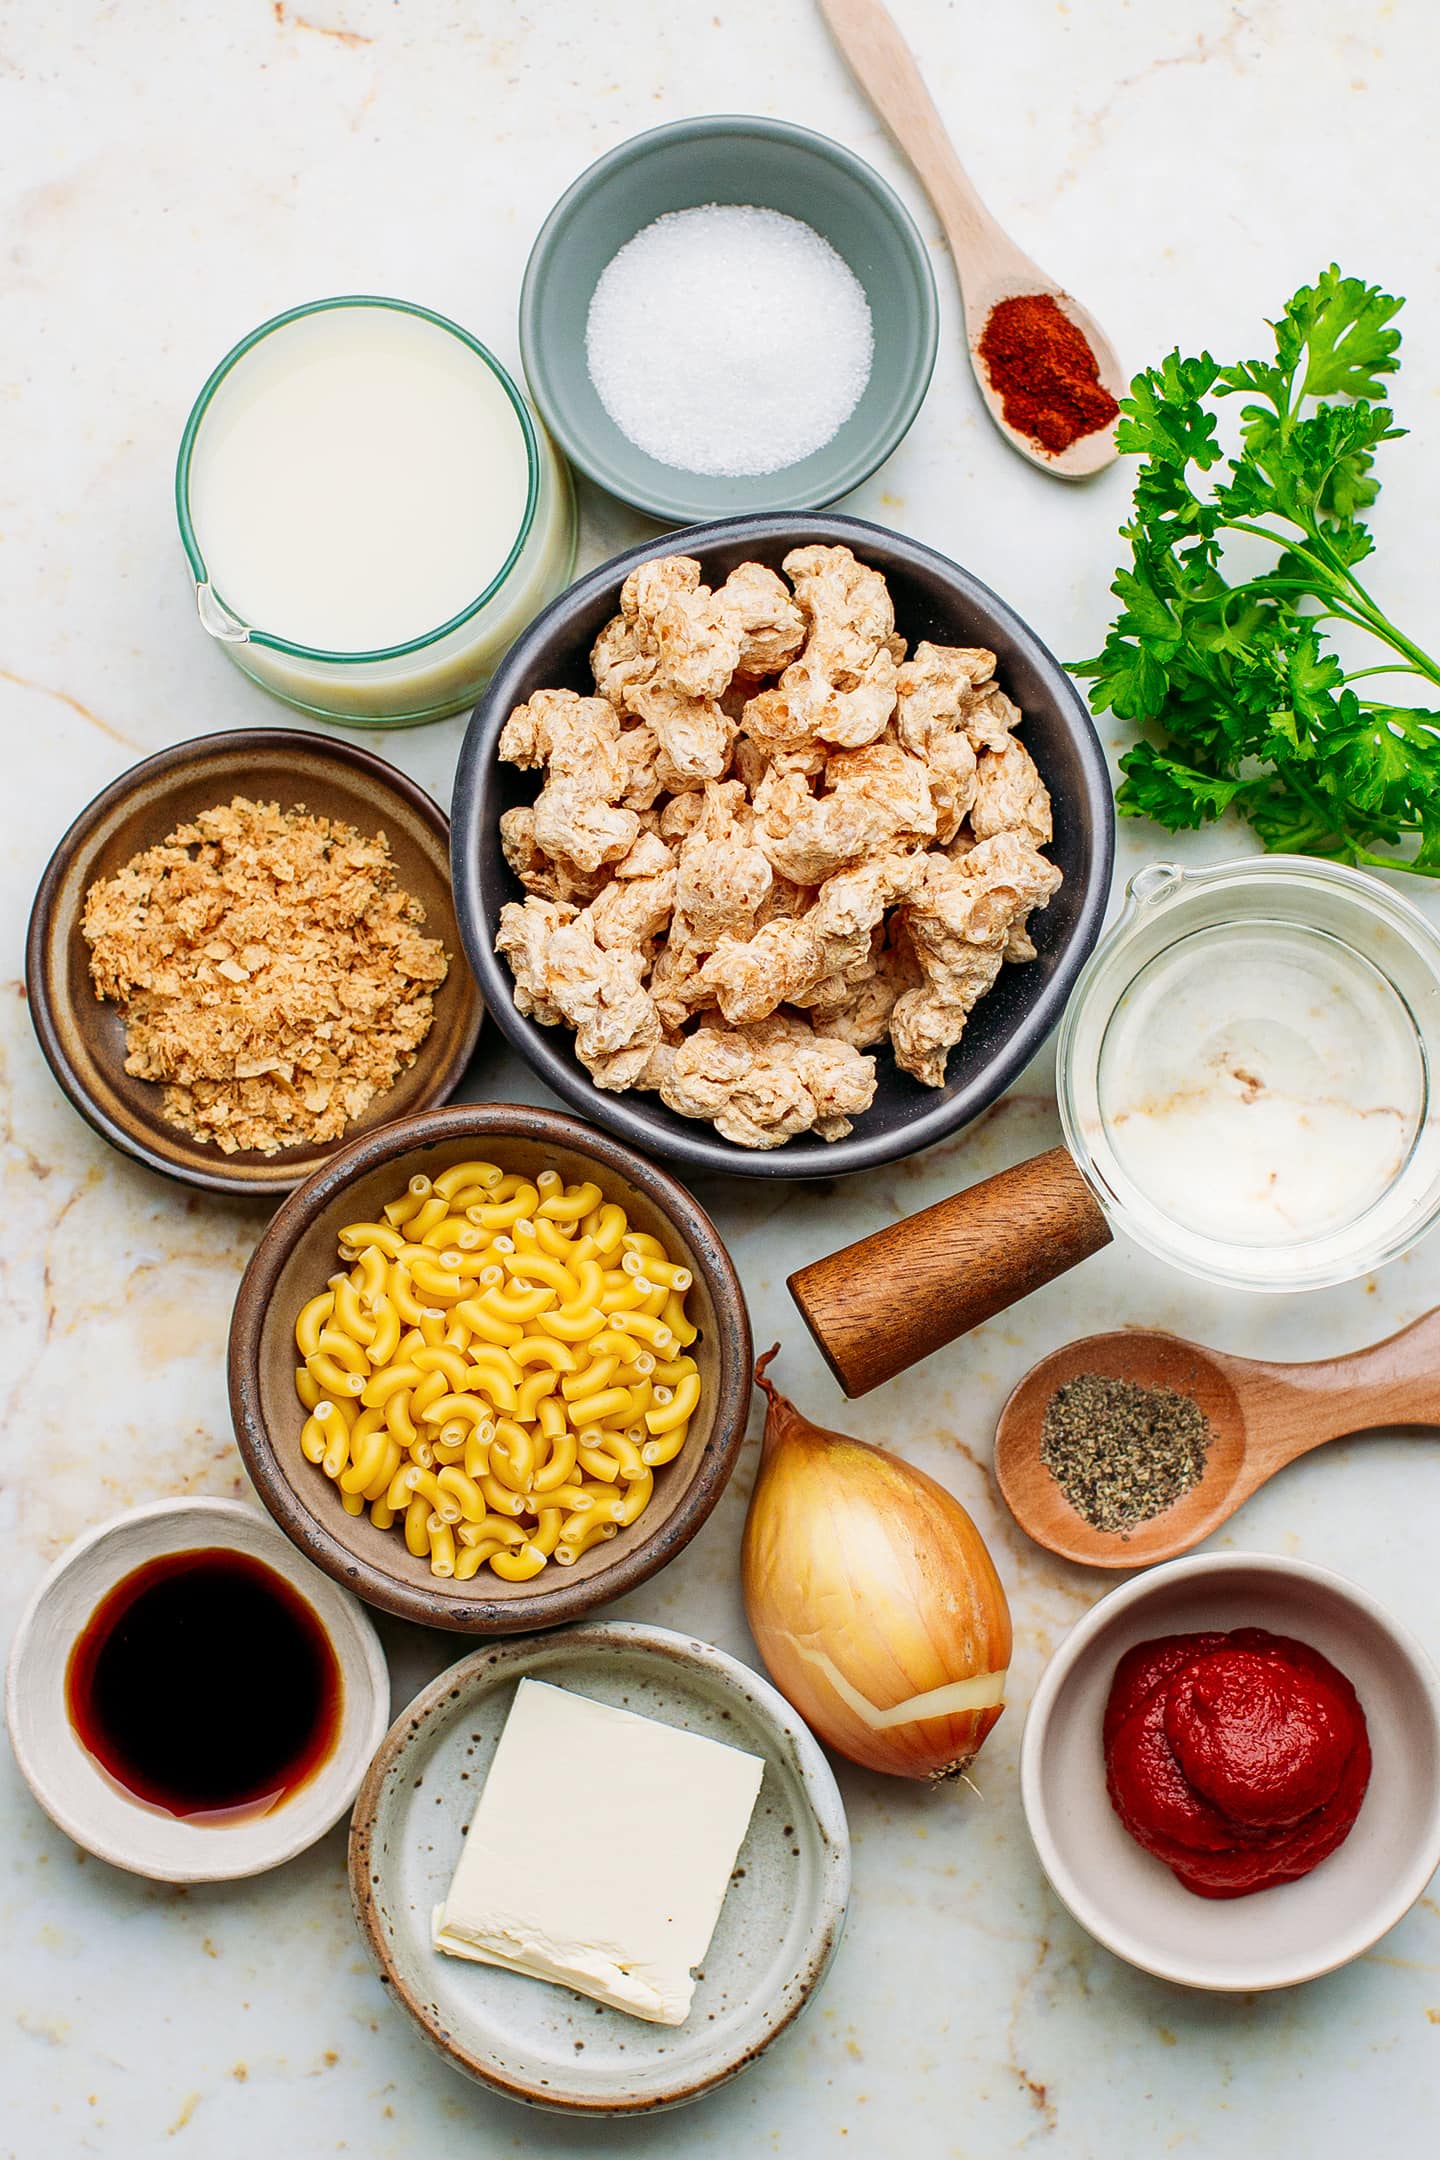 Ingredients like soy curls, macaroni, nutritional yeast, vegetable broth, and parsley.